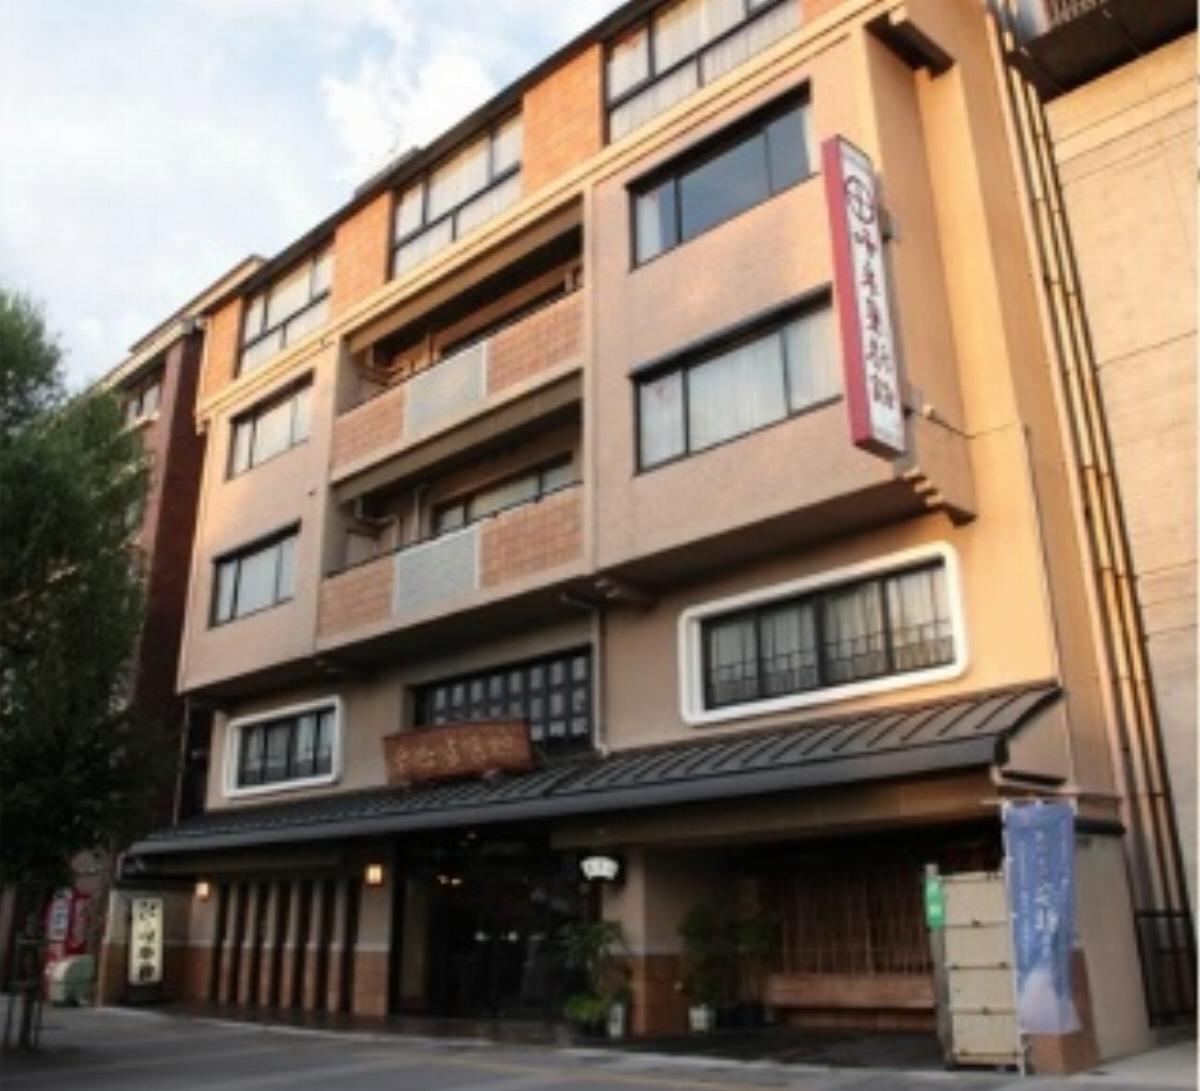 Izumiya Ryokan Hotel Kyoto Japan